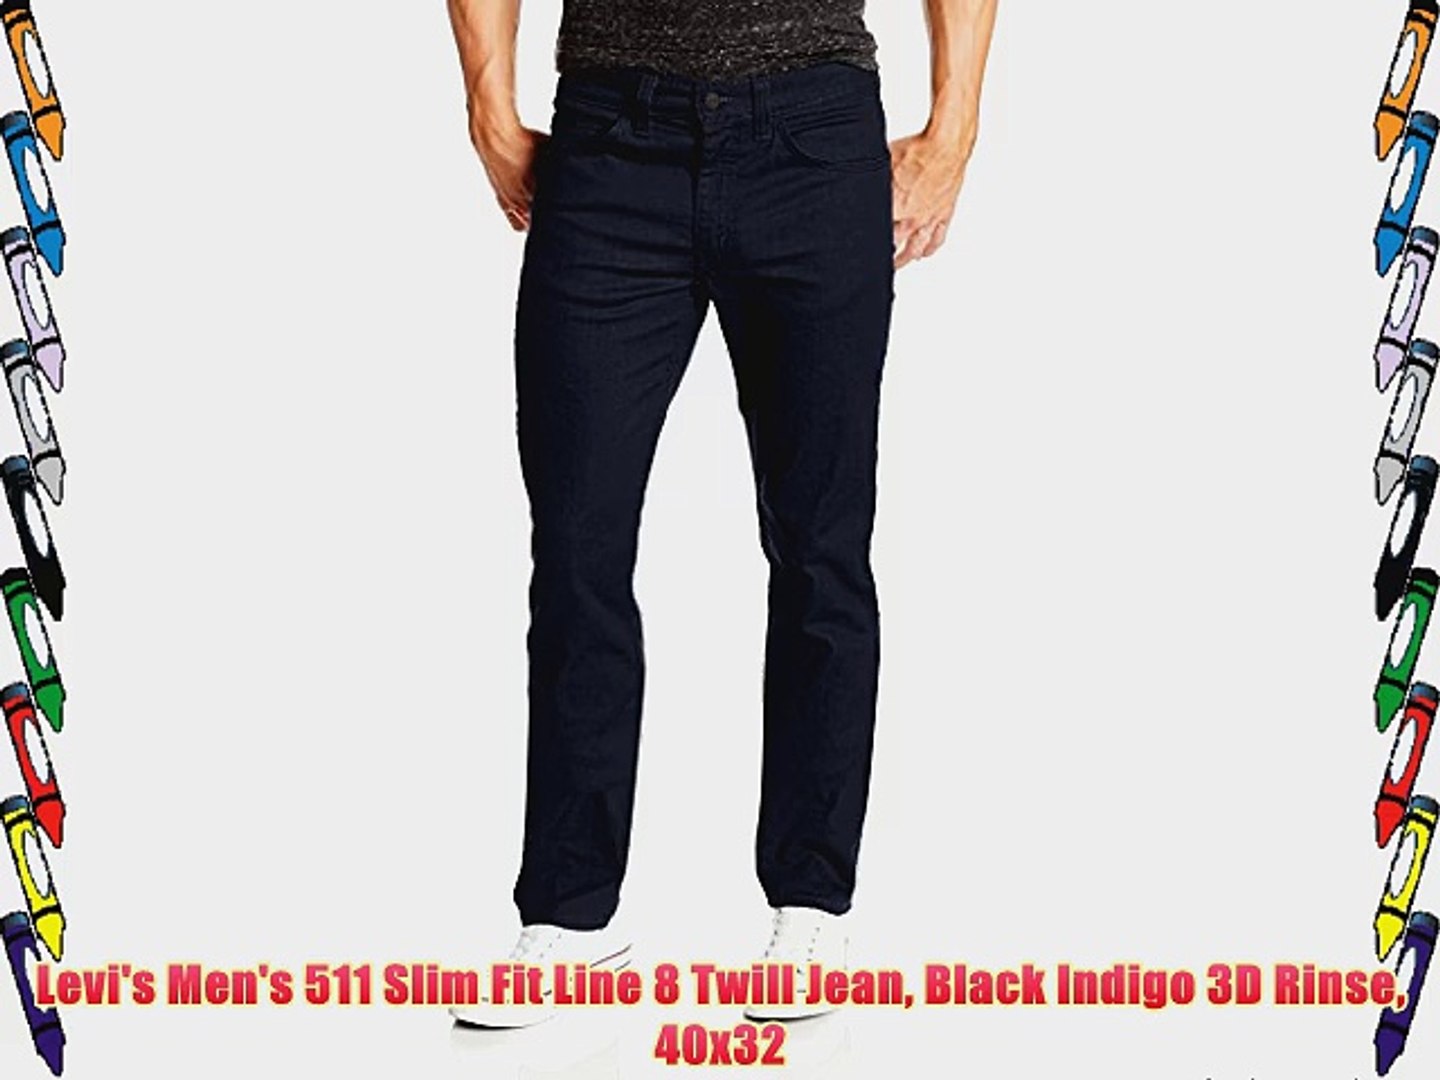 Levi's Men's 511 Slim Fit Line 8 Twill Jean Black Indigo 3D Rinse 40x32 -  video Dailymotion